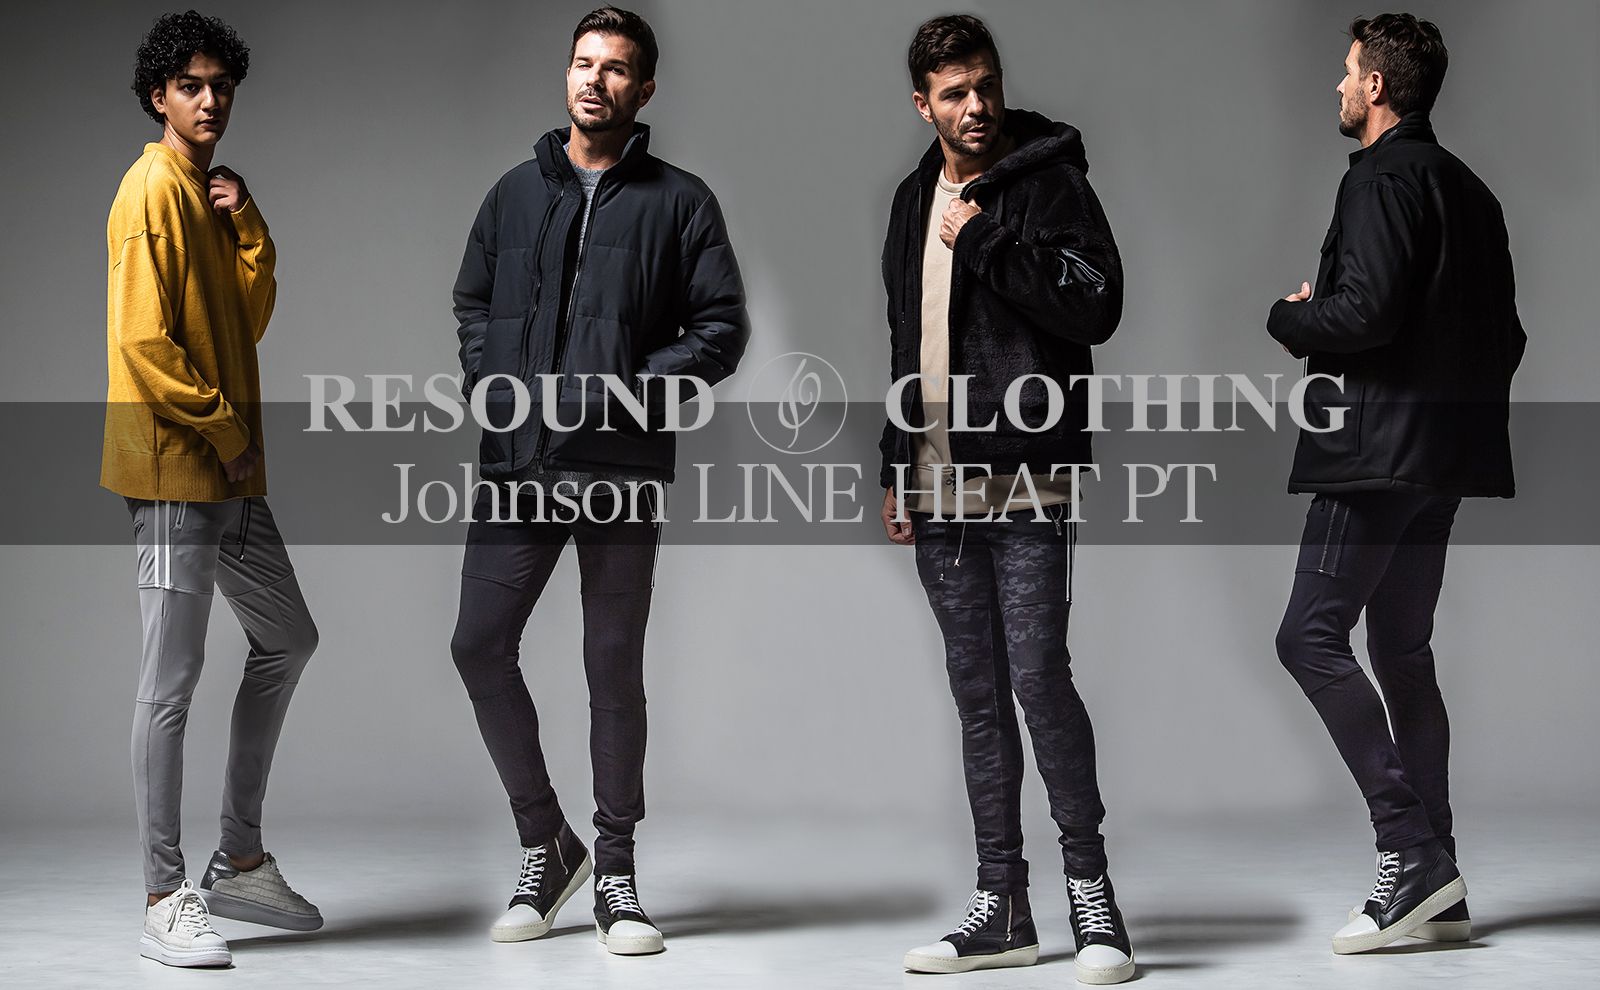 RESOUND CLOTHING - リサウンドクロージング | 正規通販 laid-back